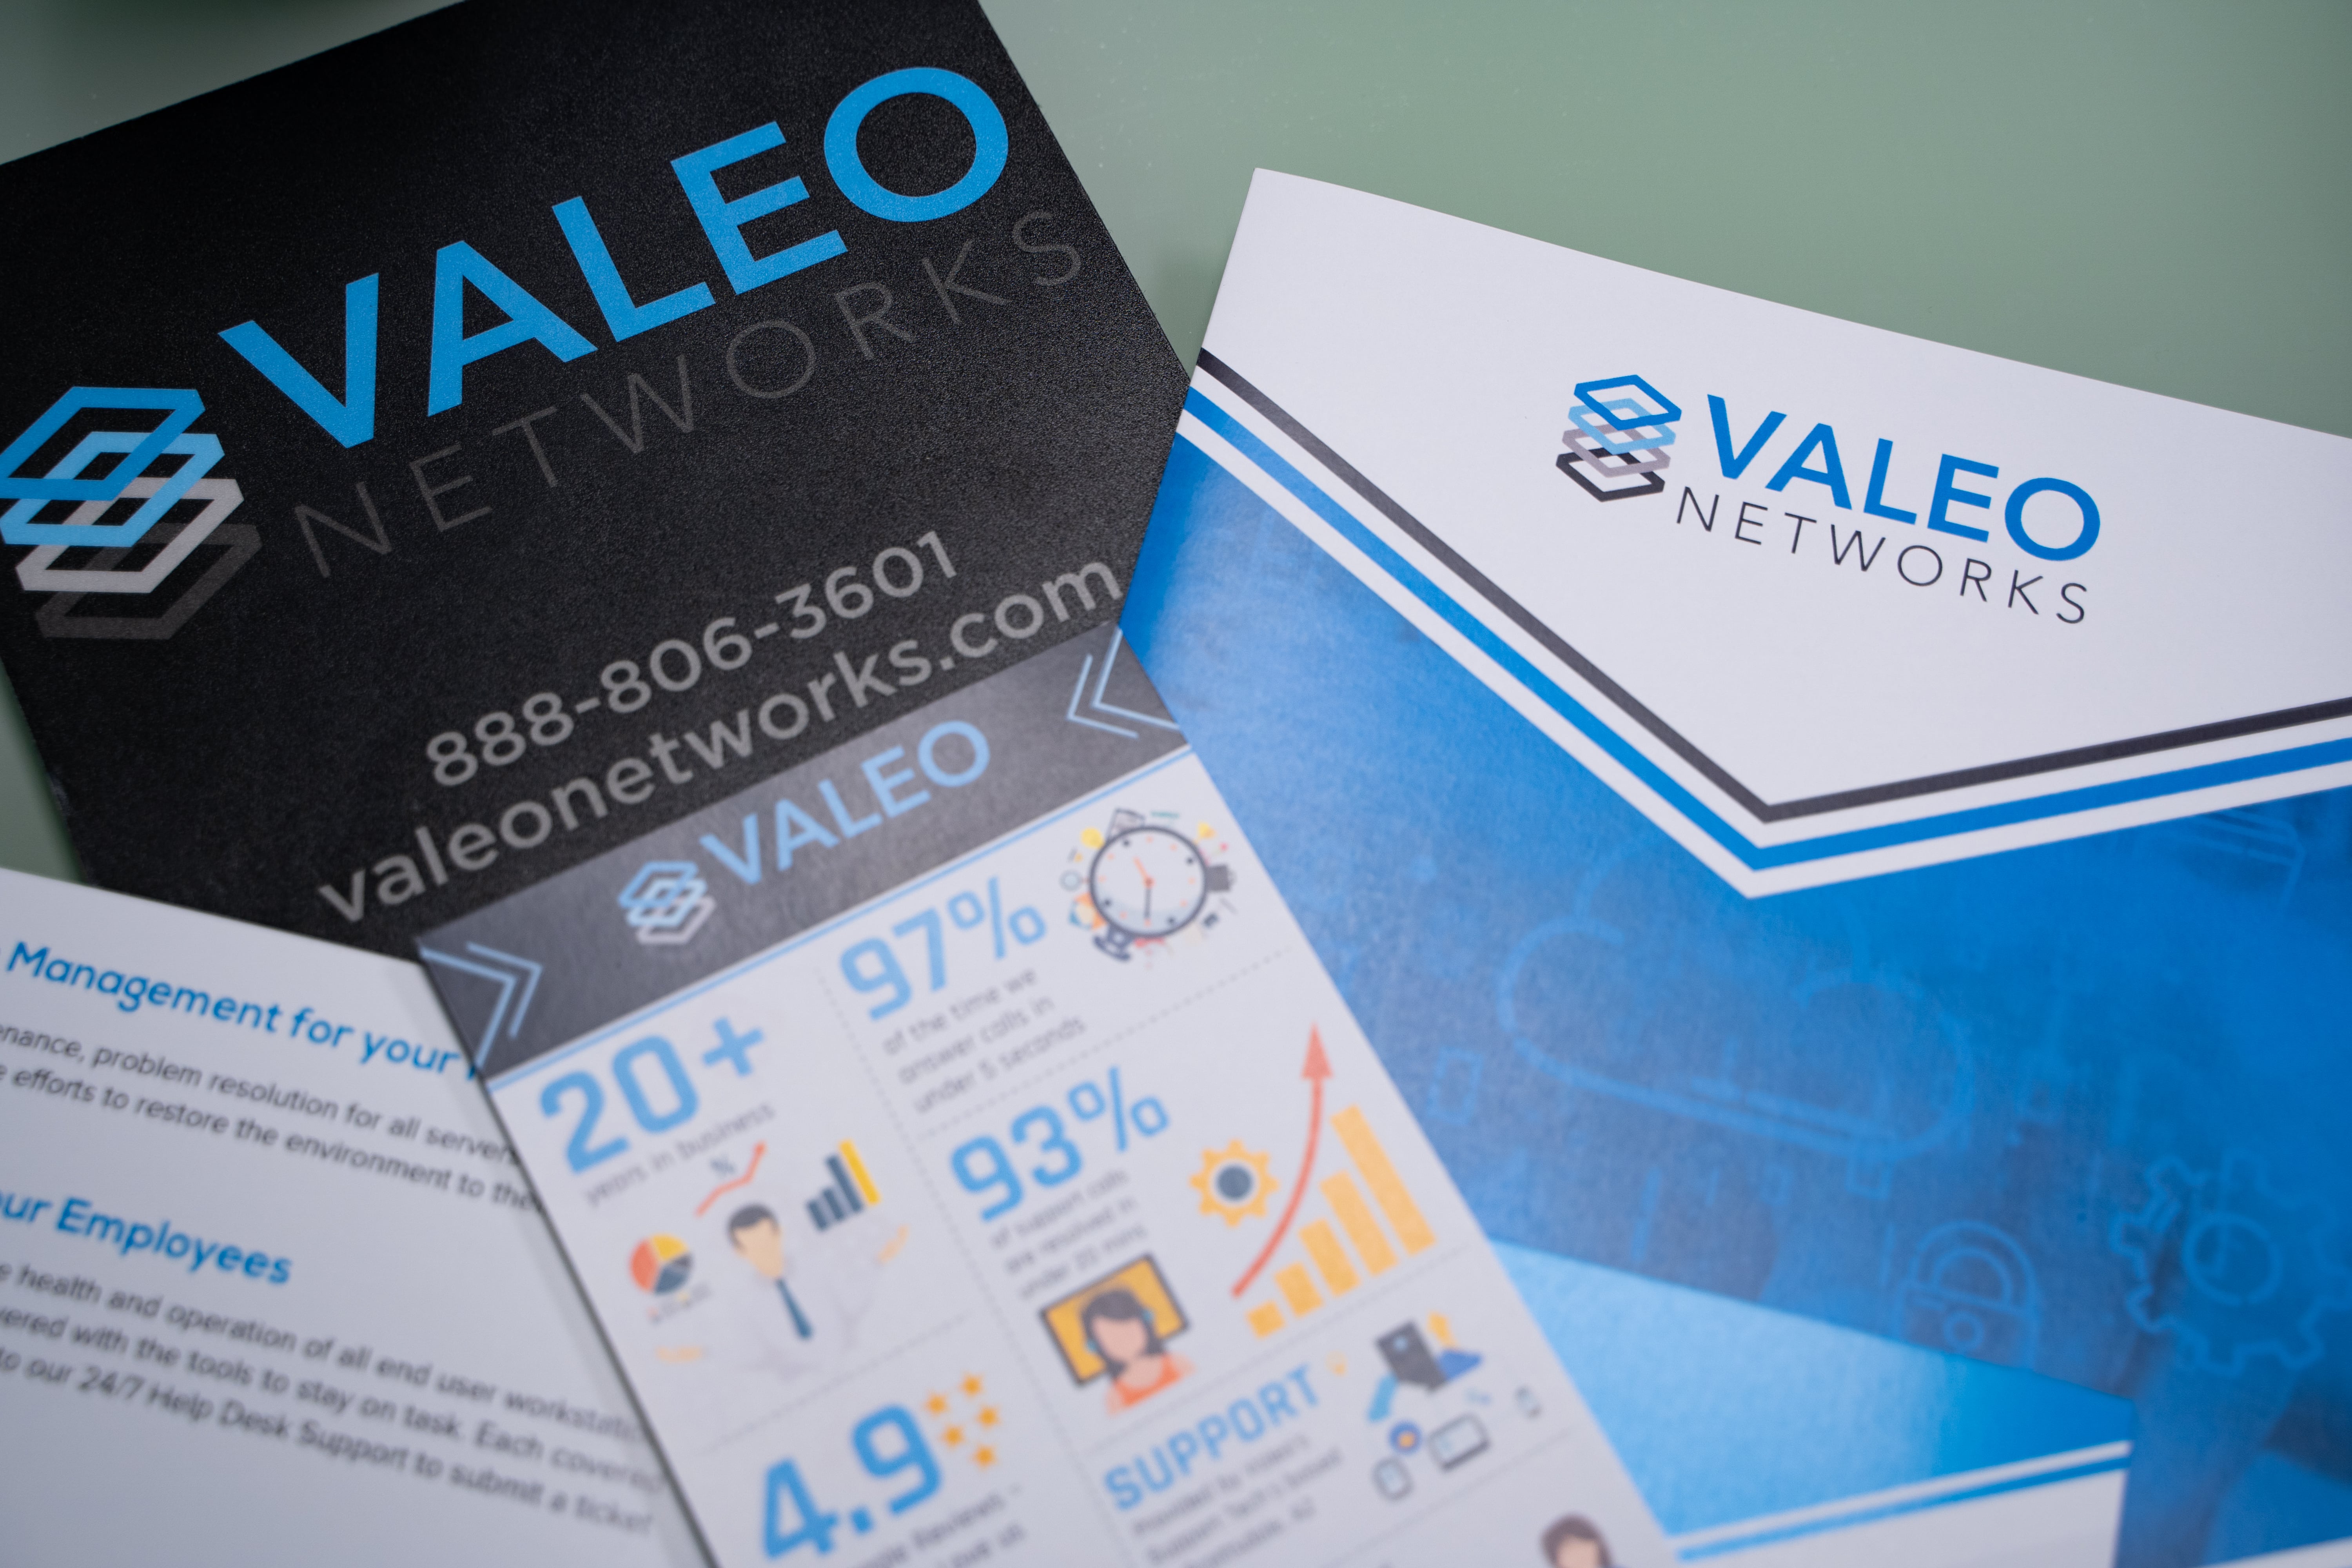 Valeo Networks Photo